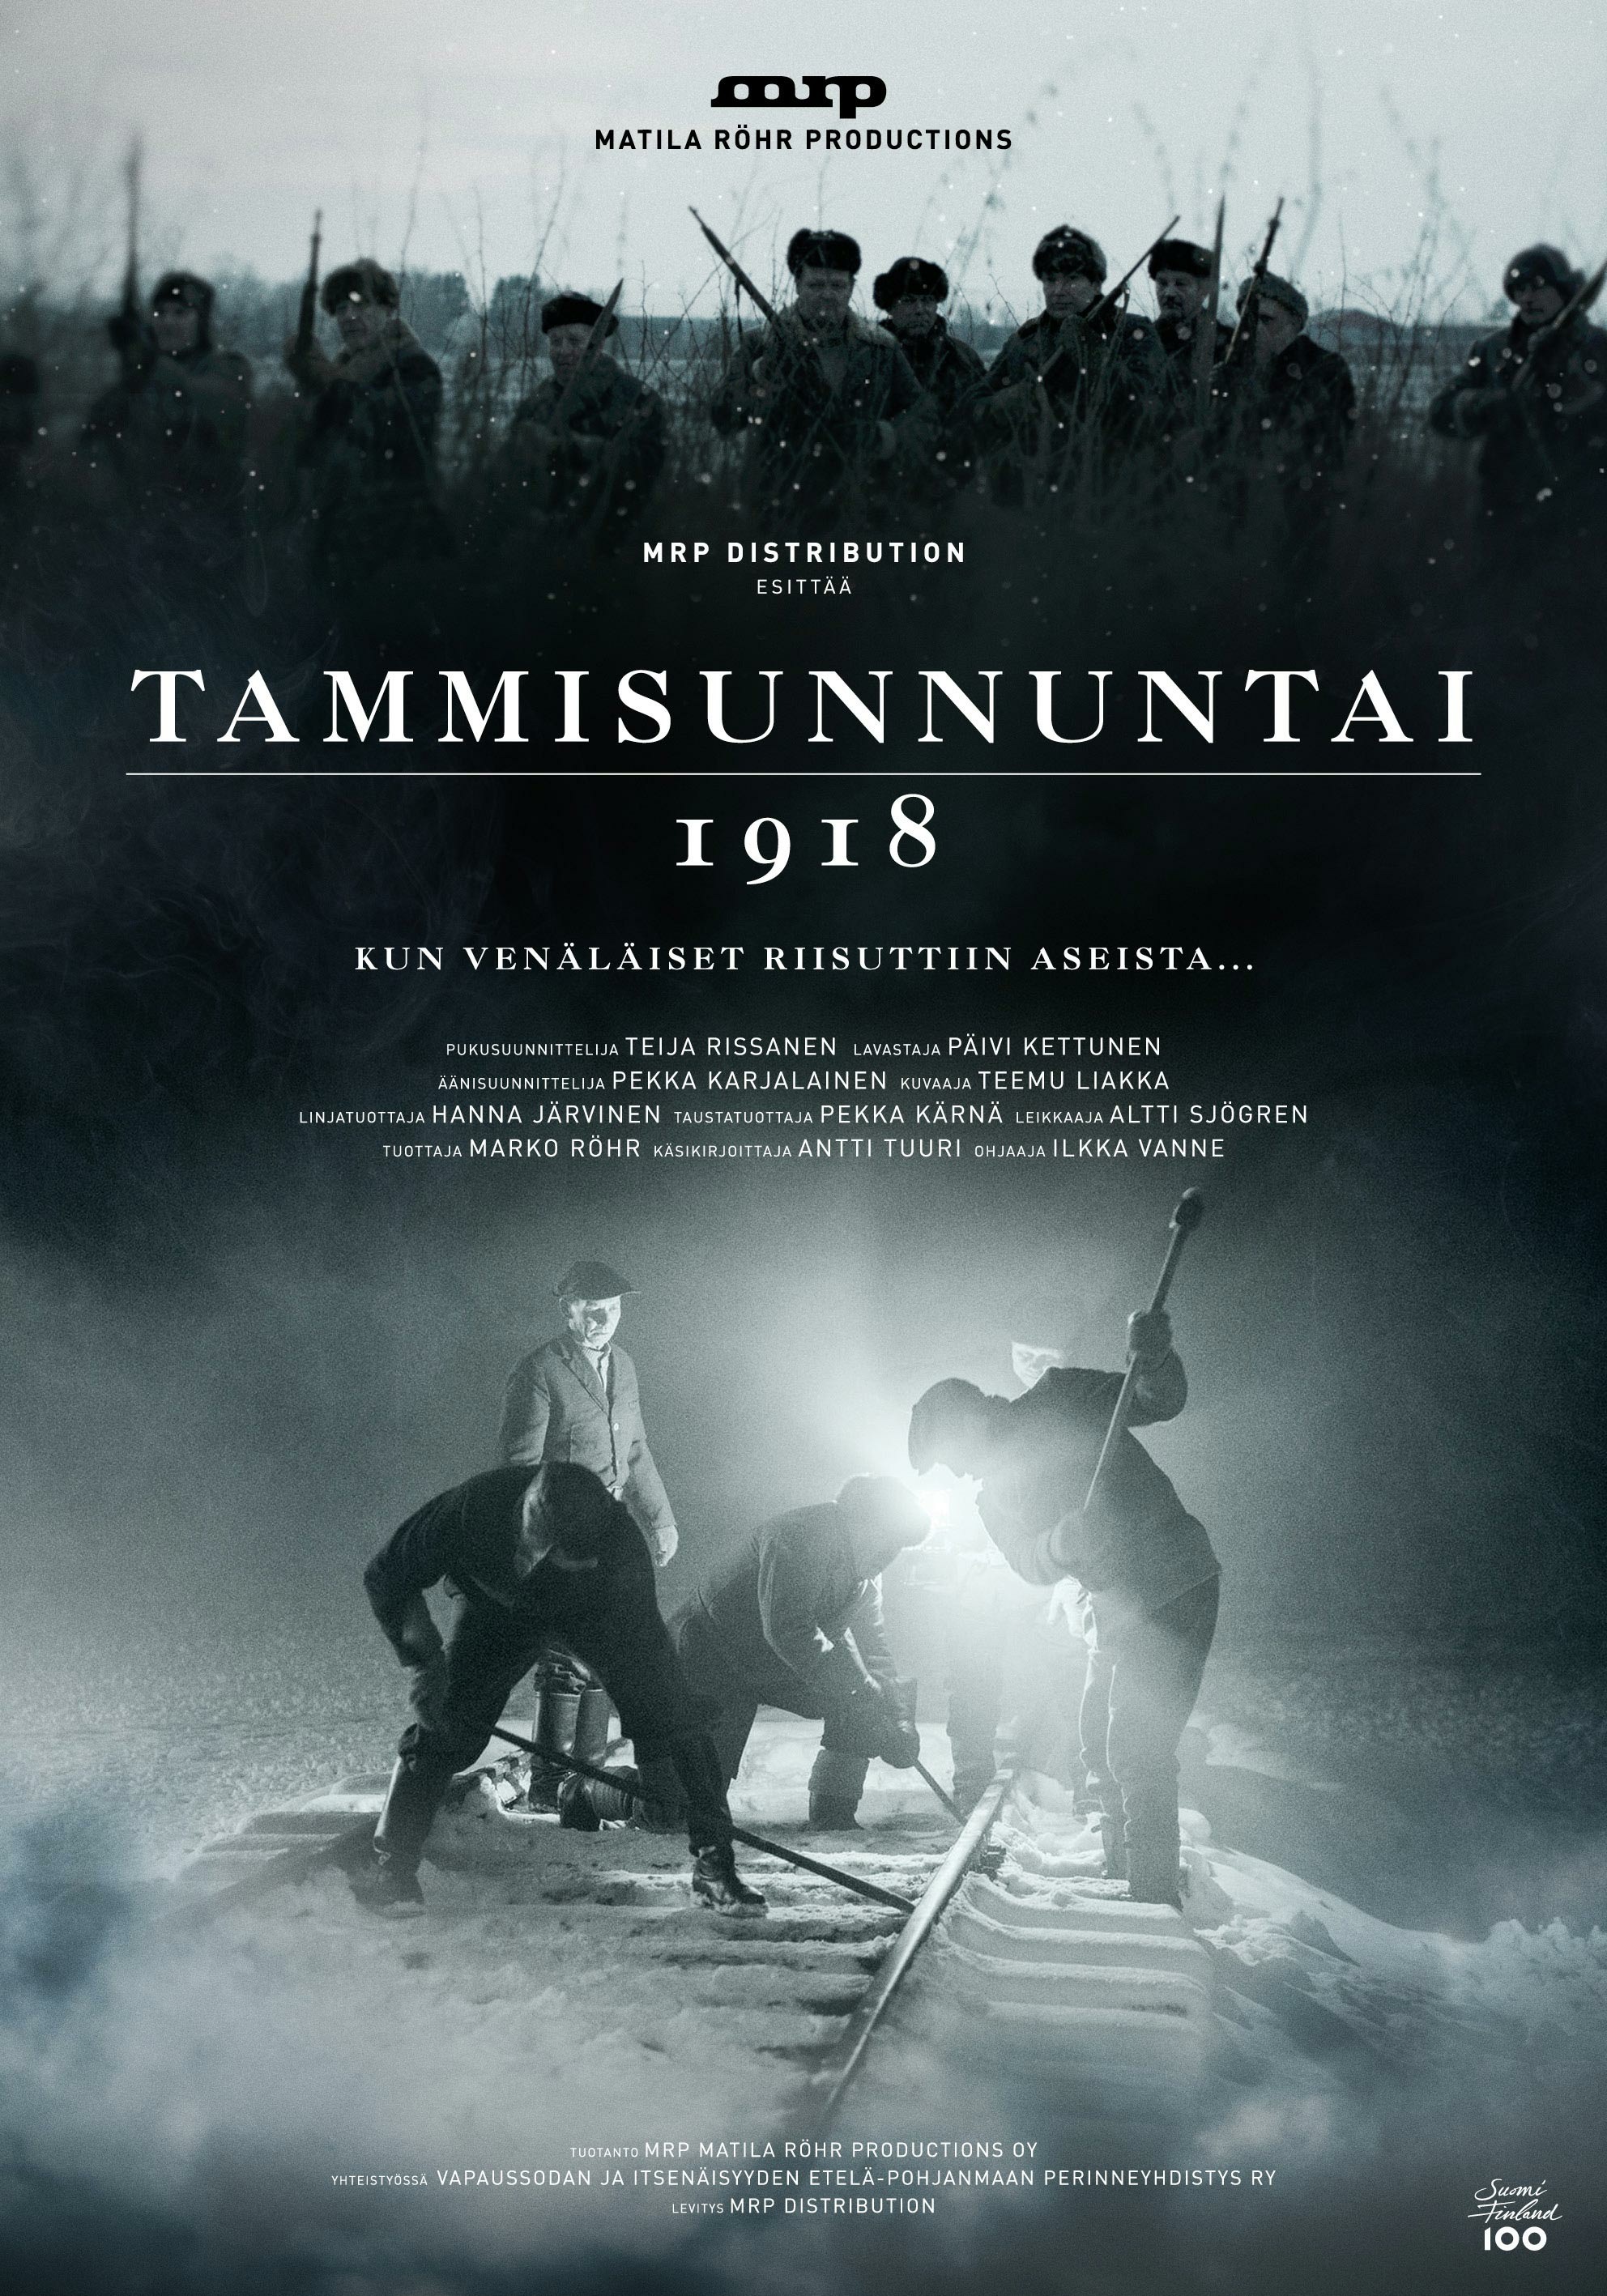 Mega Sized Movie Poster Image for Tammisunnuntai 1918 